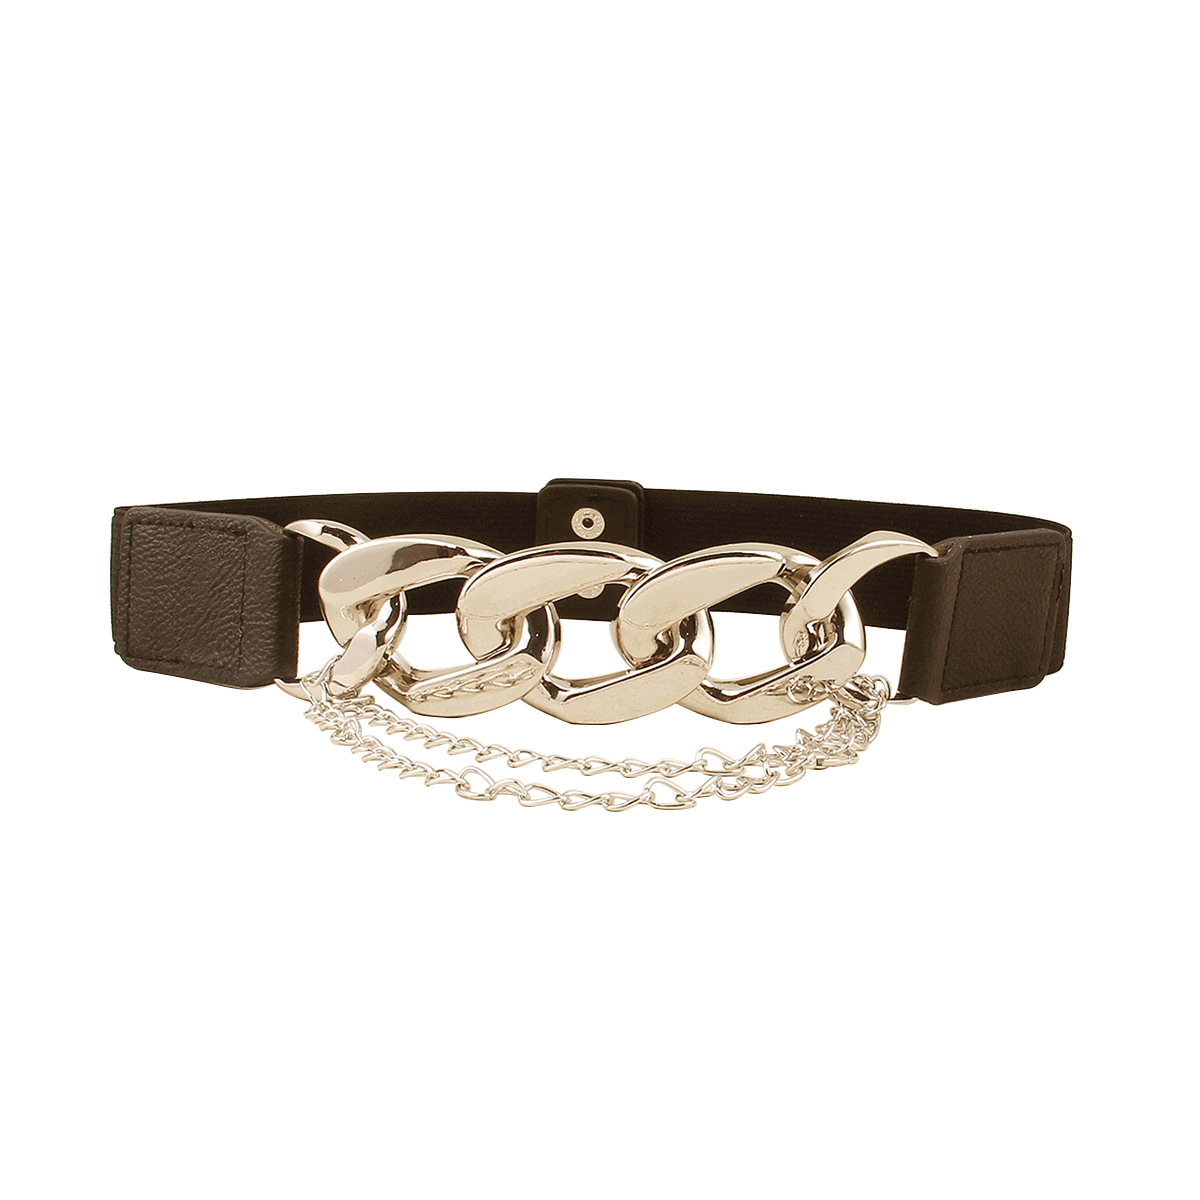 Metal chain decorative belt